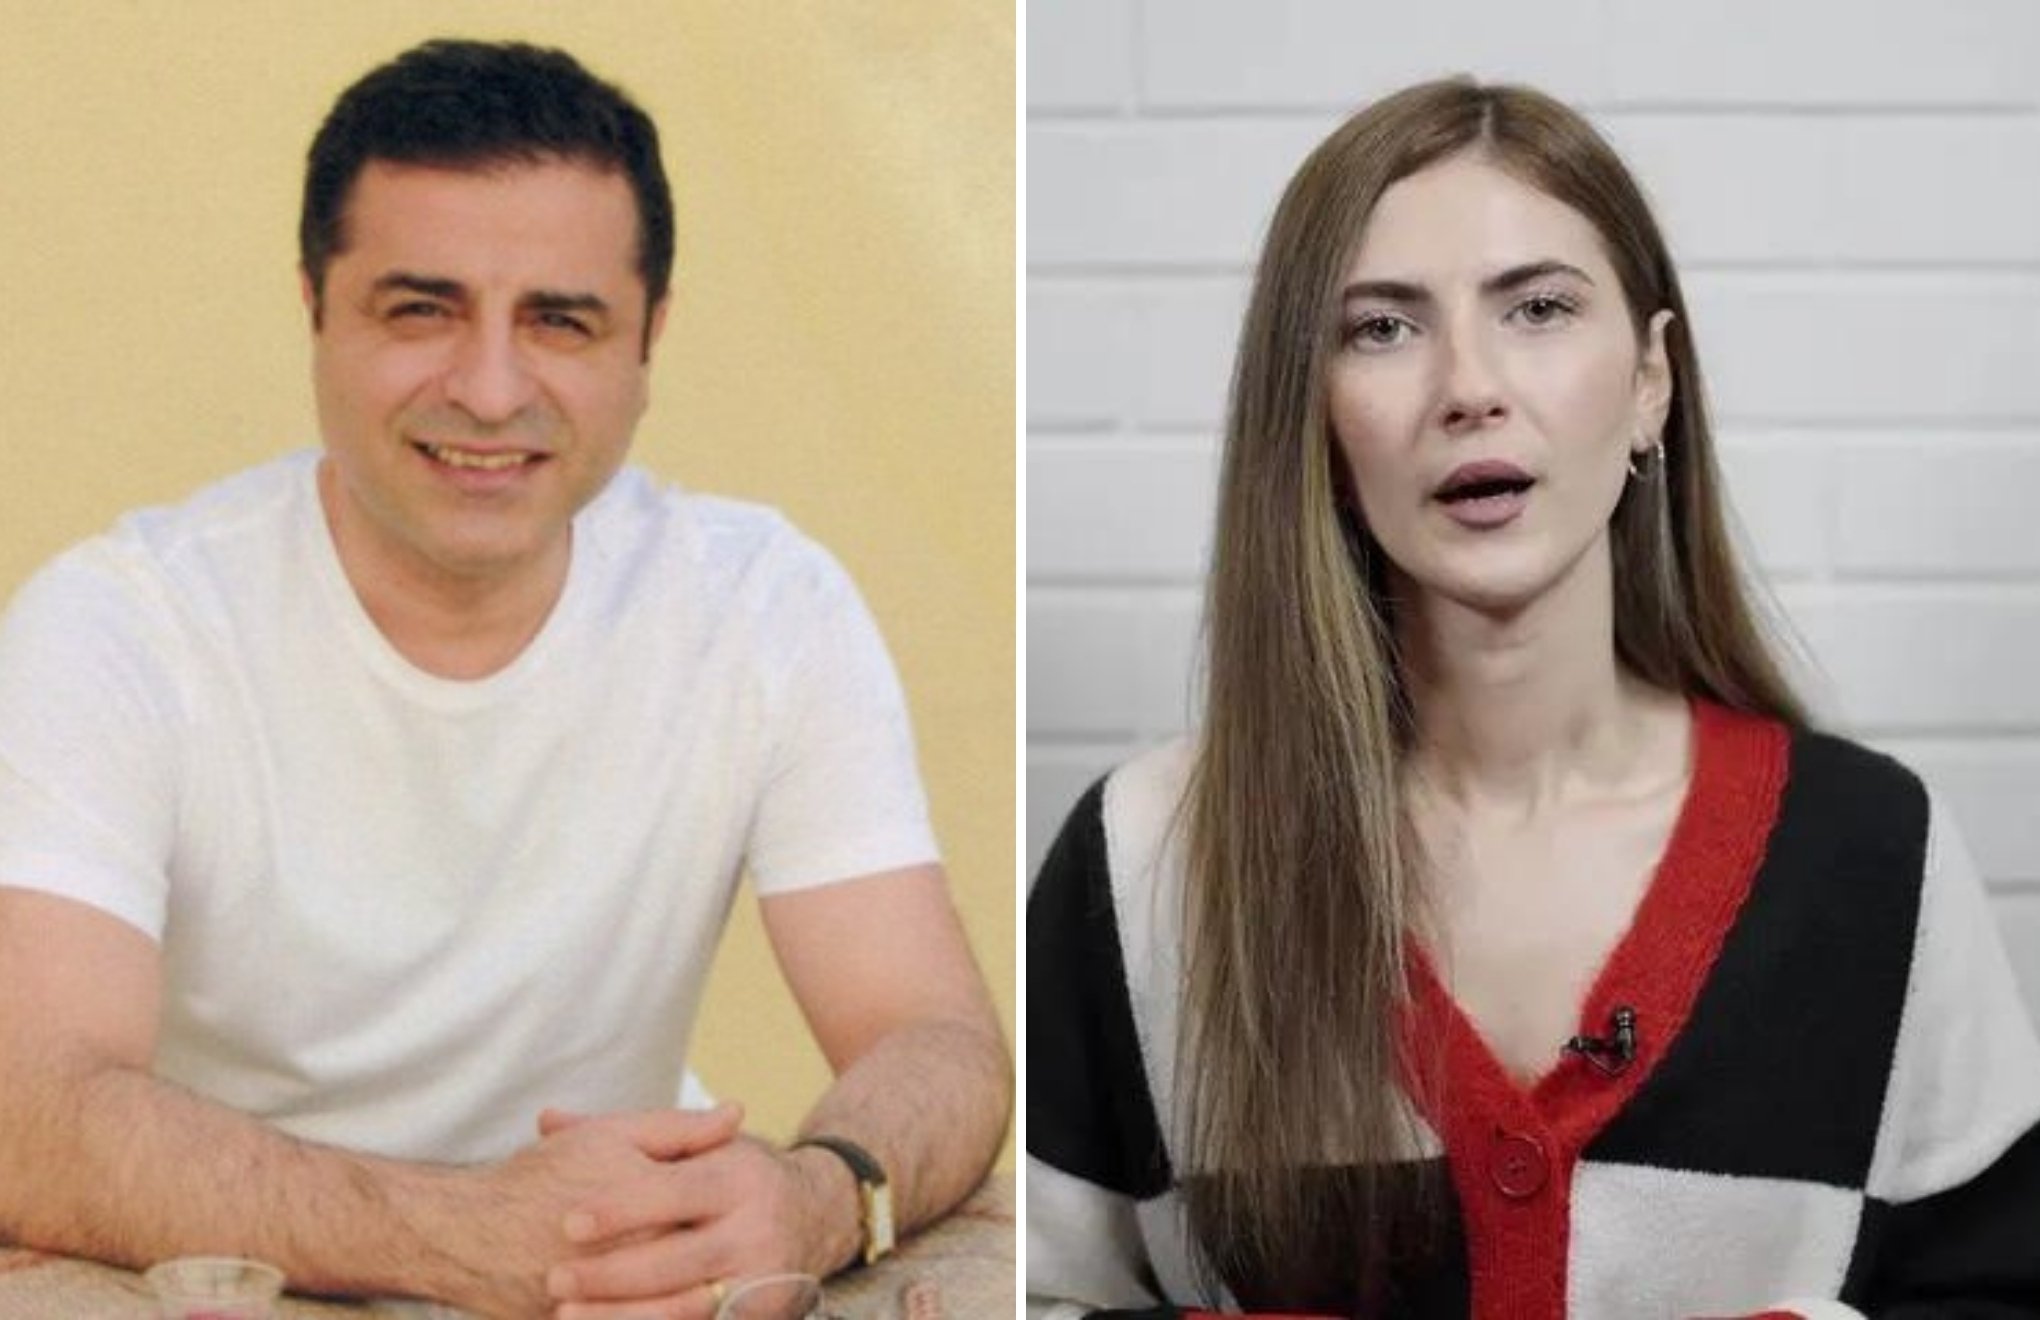 Demirtaş files a complaint against YouTuber Büşra Dede over insulting remarks